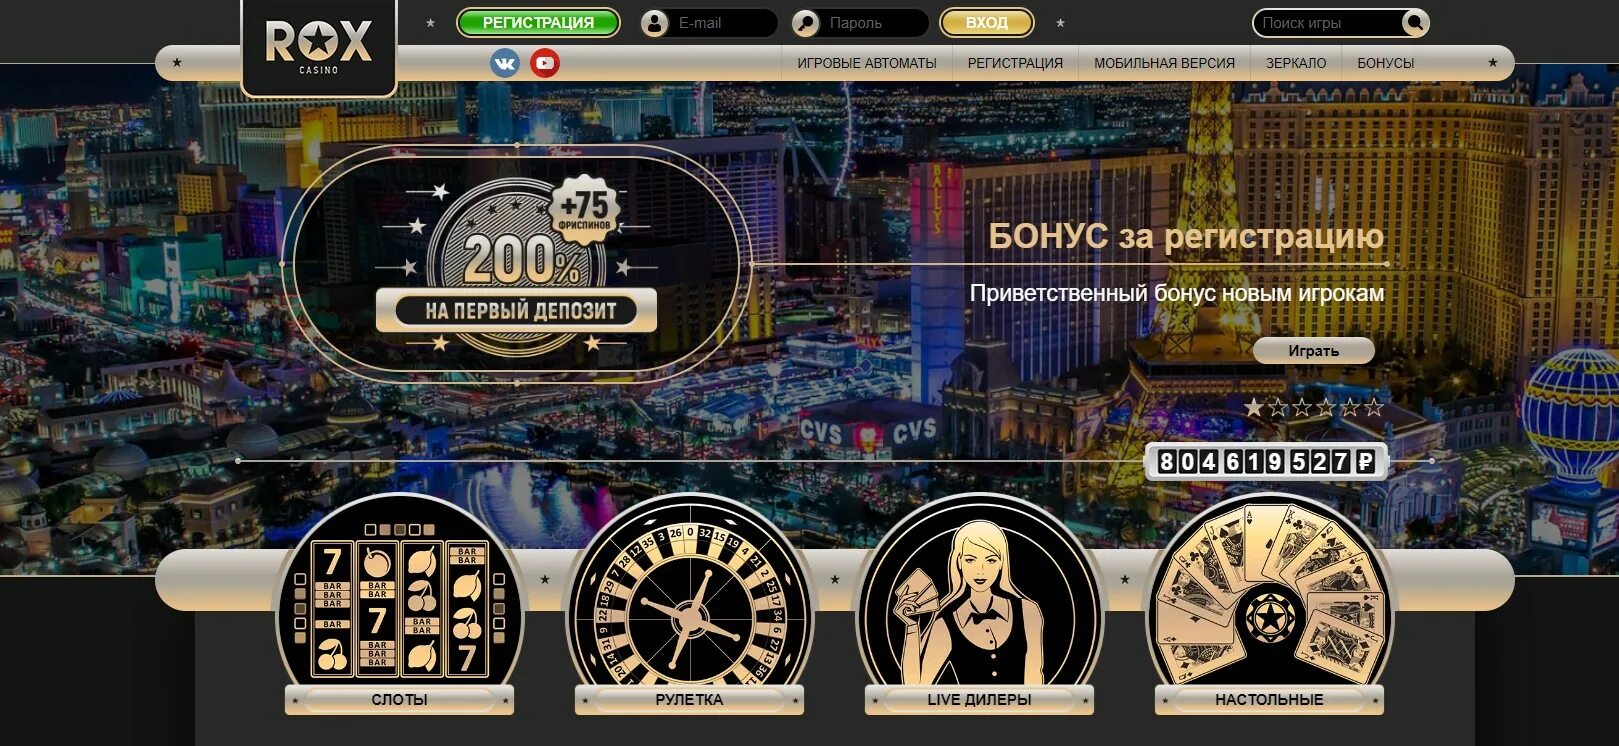 Сайт rox casino rox casino ru. Игровые автоматы Рокс казино. Рокс казино зеркало. Рок казино.